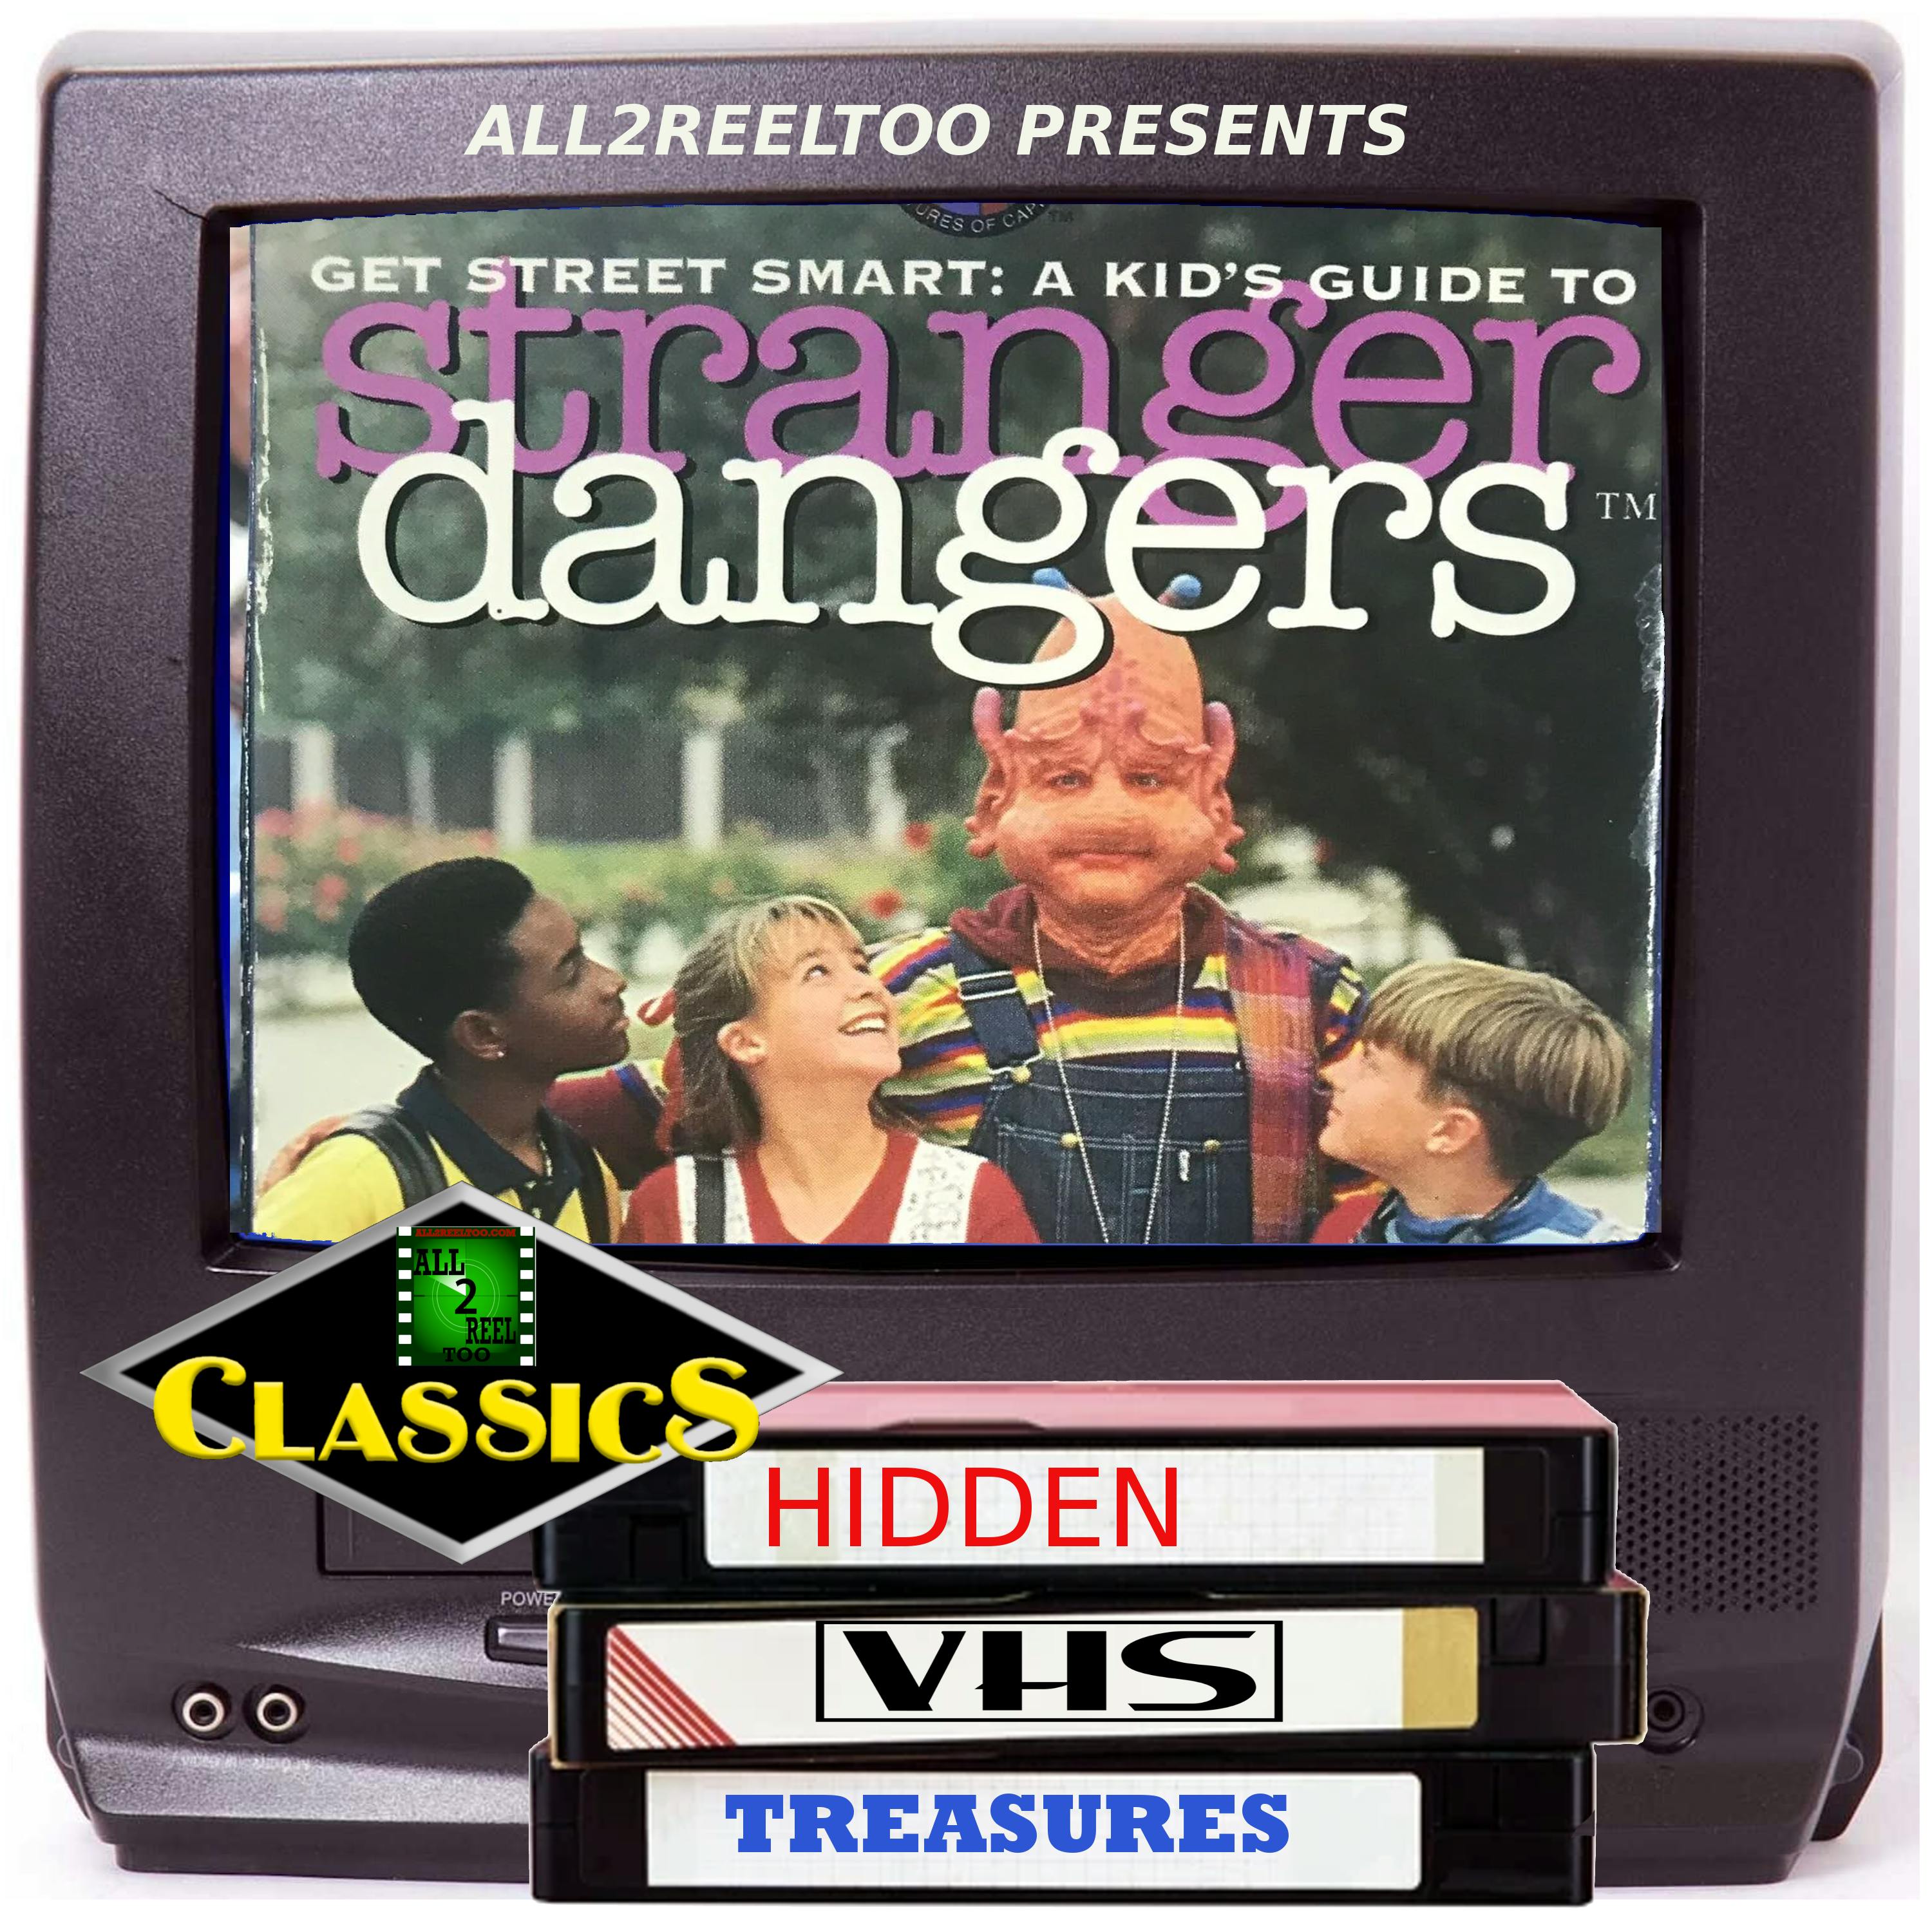 Get Street Smart: A Kid's Guide To Stranger Dangers (1995) - HIDDEN VHS TREASURES - ALL2REELTOO CLASSICS